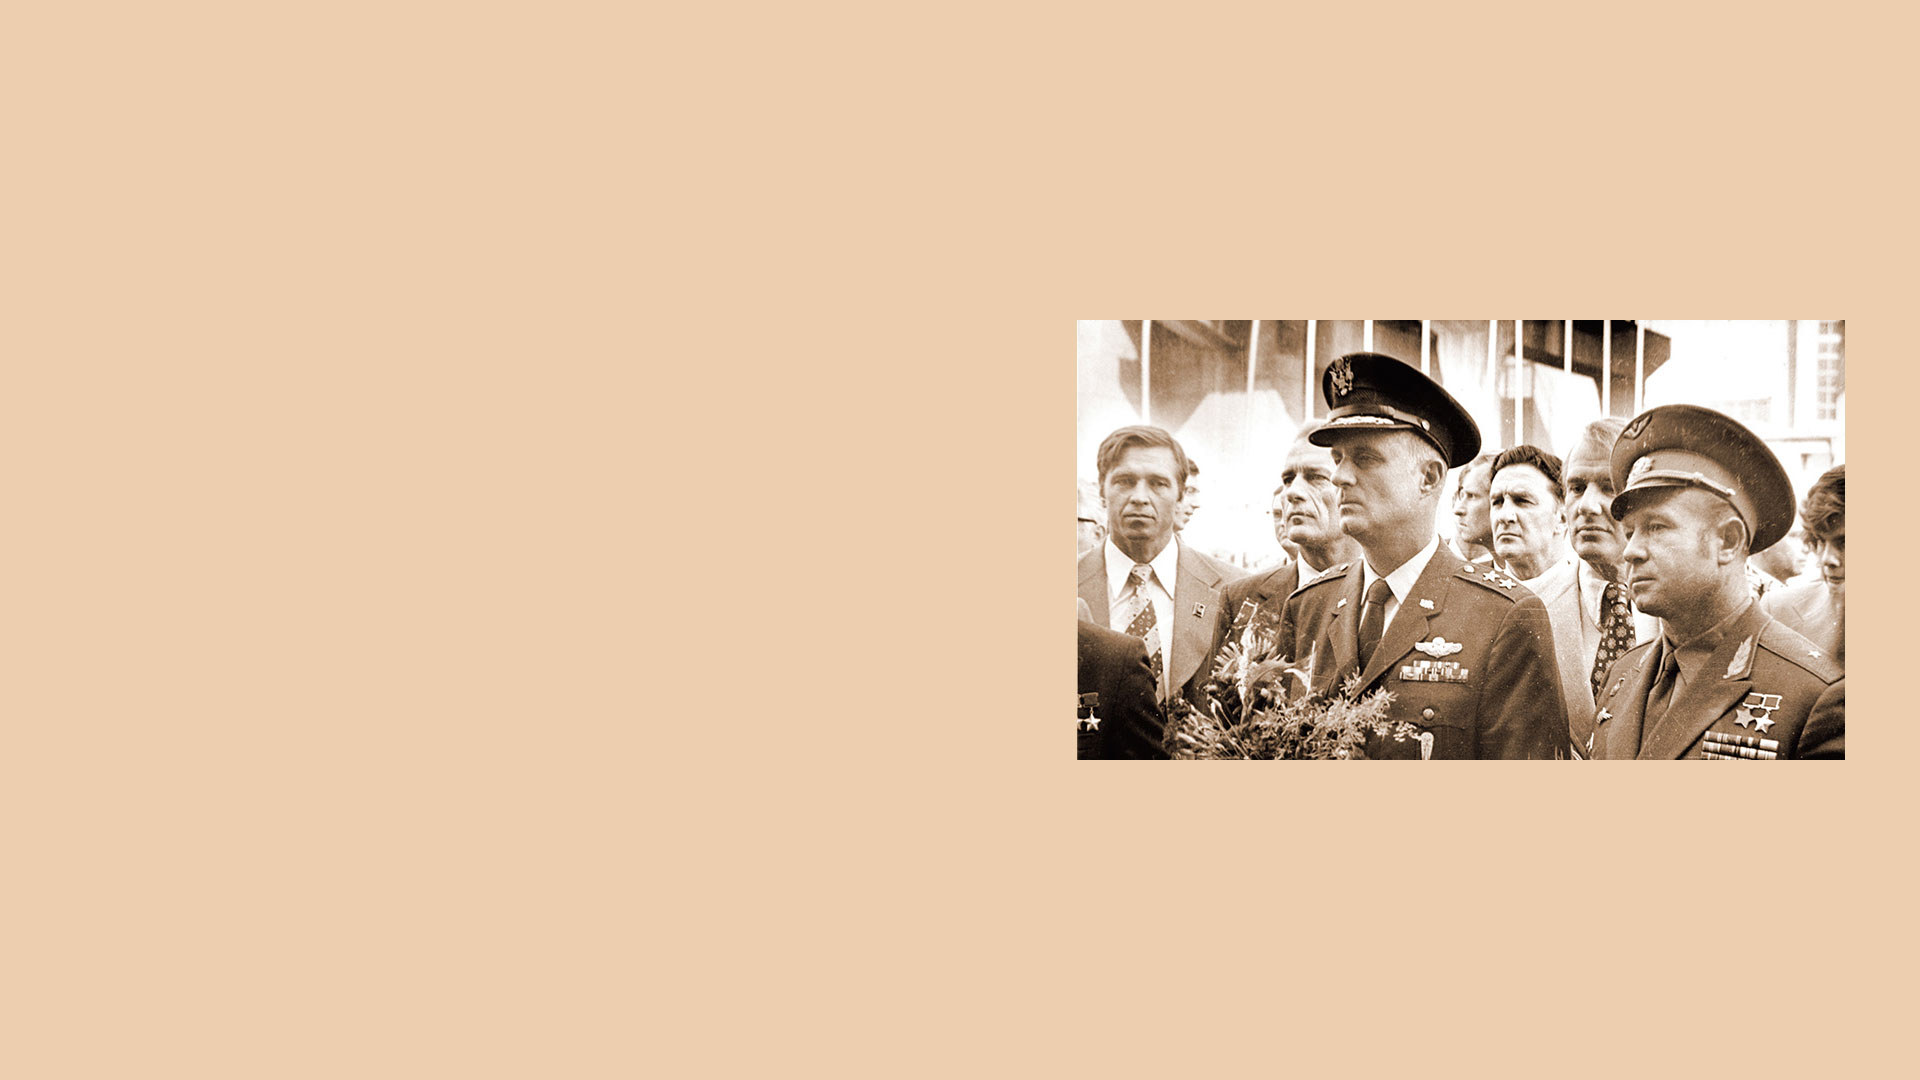 Астронавт Т. Стаффорд и космонавт А. Леонов («Союз—Аполлон») на Волжской ГЭС. 1975 год | Astronaut Thomas Stafford and cosmonaut Alexey Leonov (ASTP) at the Volzhskaya HPP, 1975